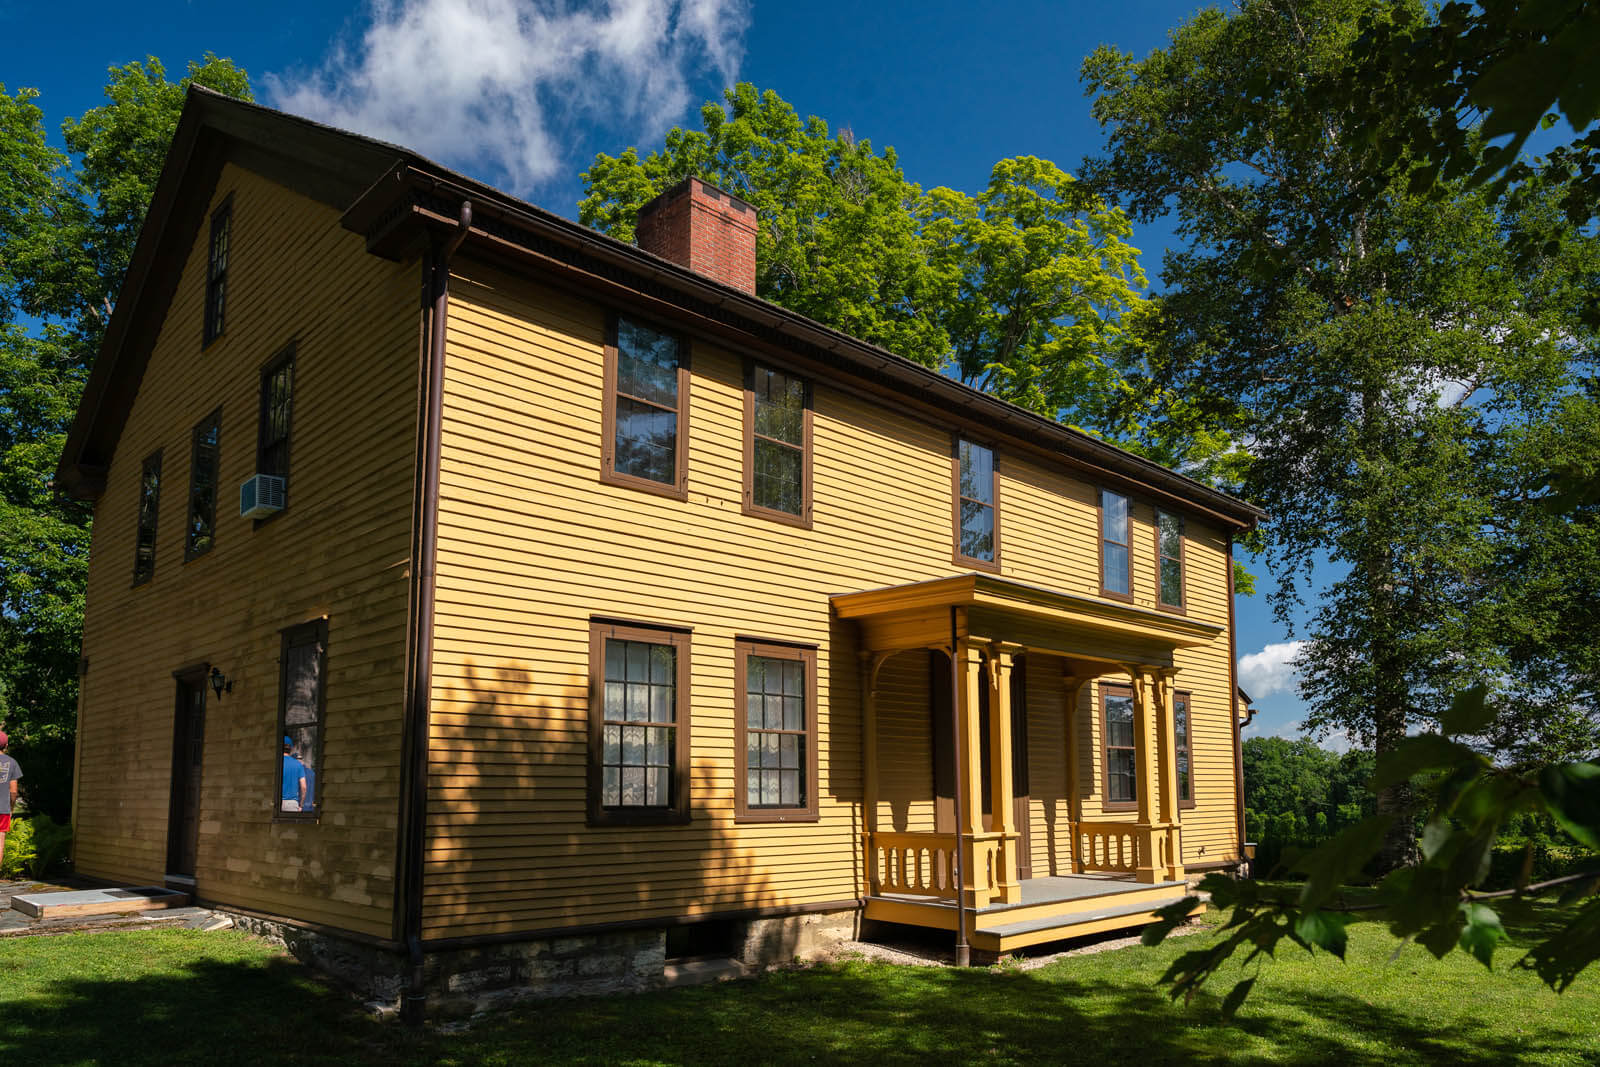 Herman Melville's Arrowhead home in the Berkshires near Pittsfield MA